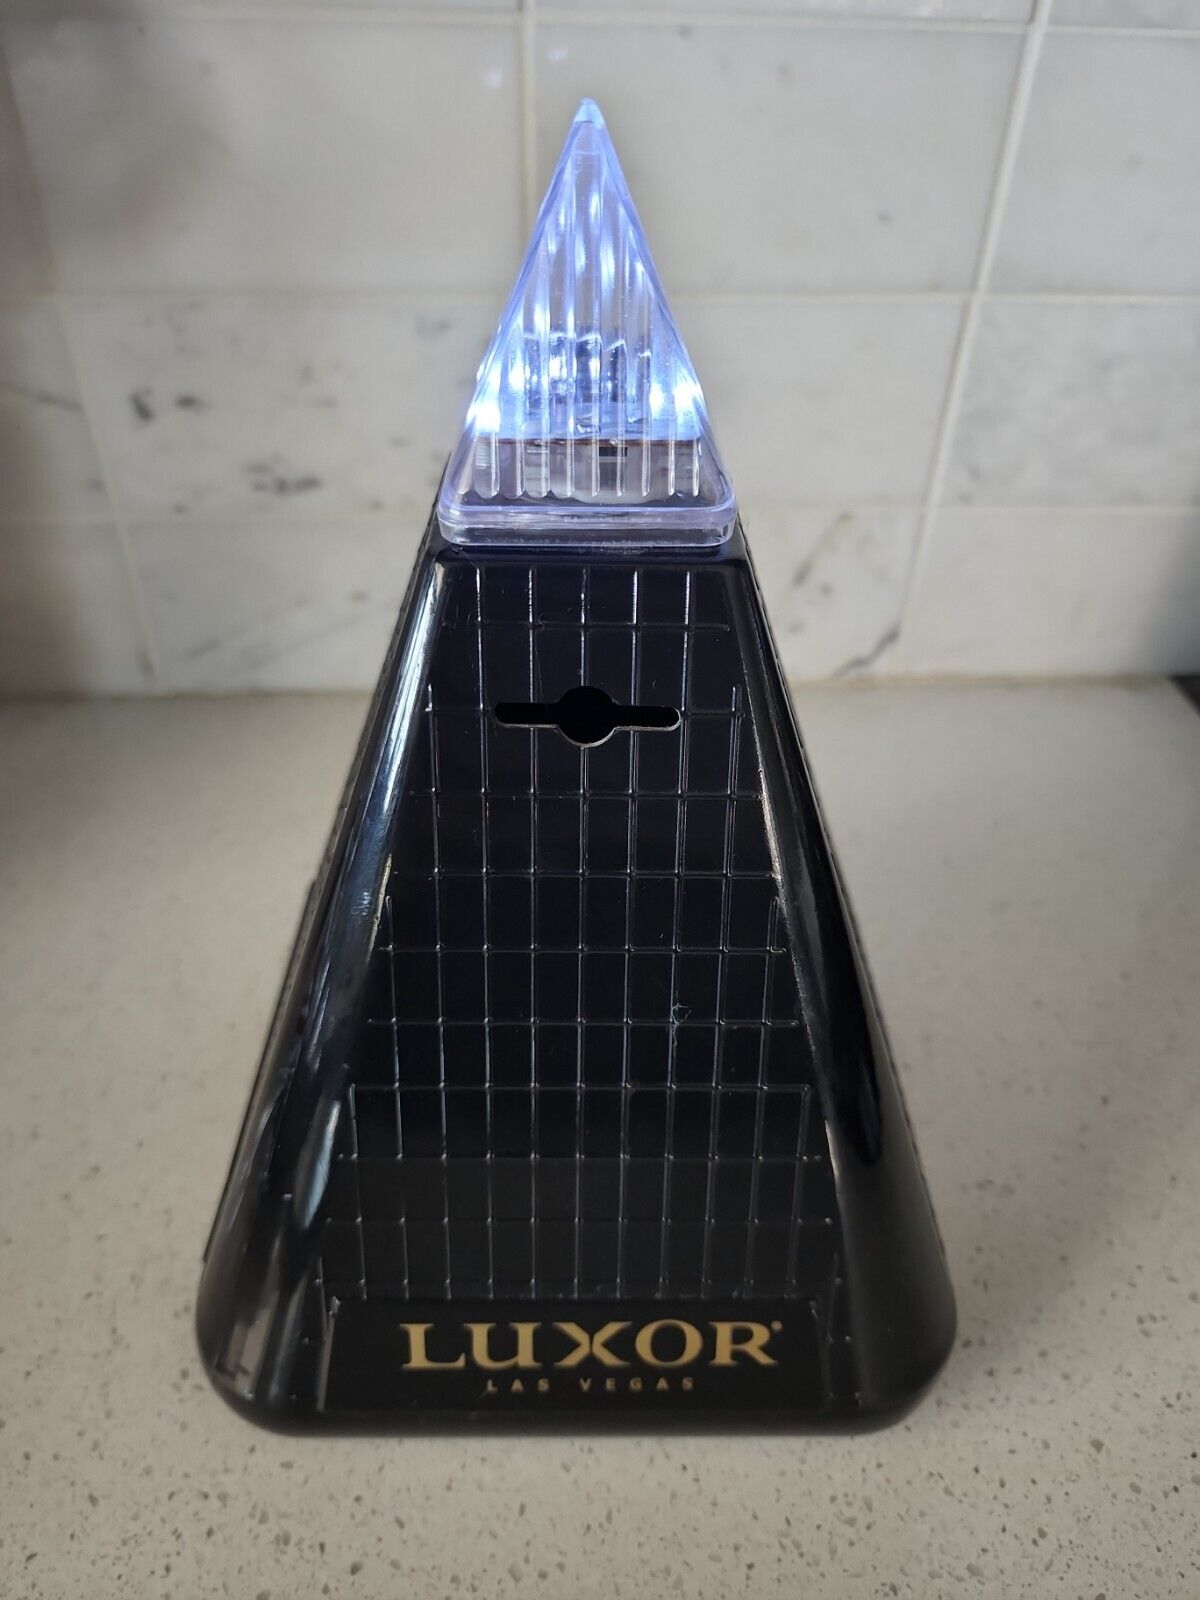 Luxor Casino Las Vegas Souvenir Pyramid Plastic Black Bank